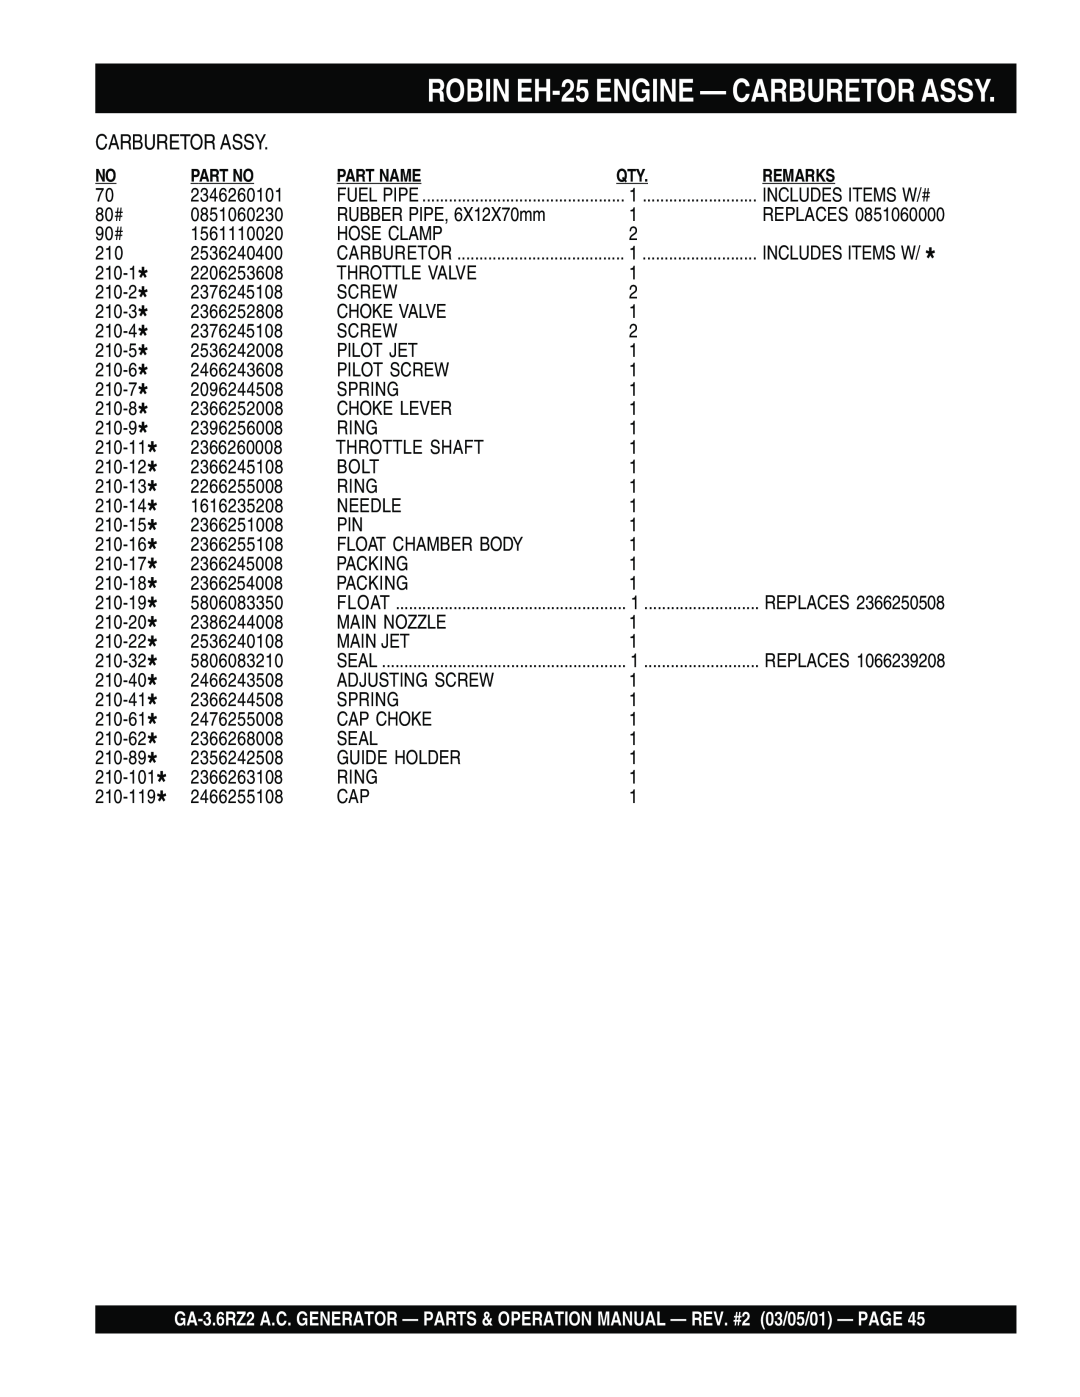 Multiquip GA-3.6RZ2 operation manual ROBIN EH-25ENGINE — CARBURETOR ASSY, 2346260101 